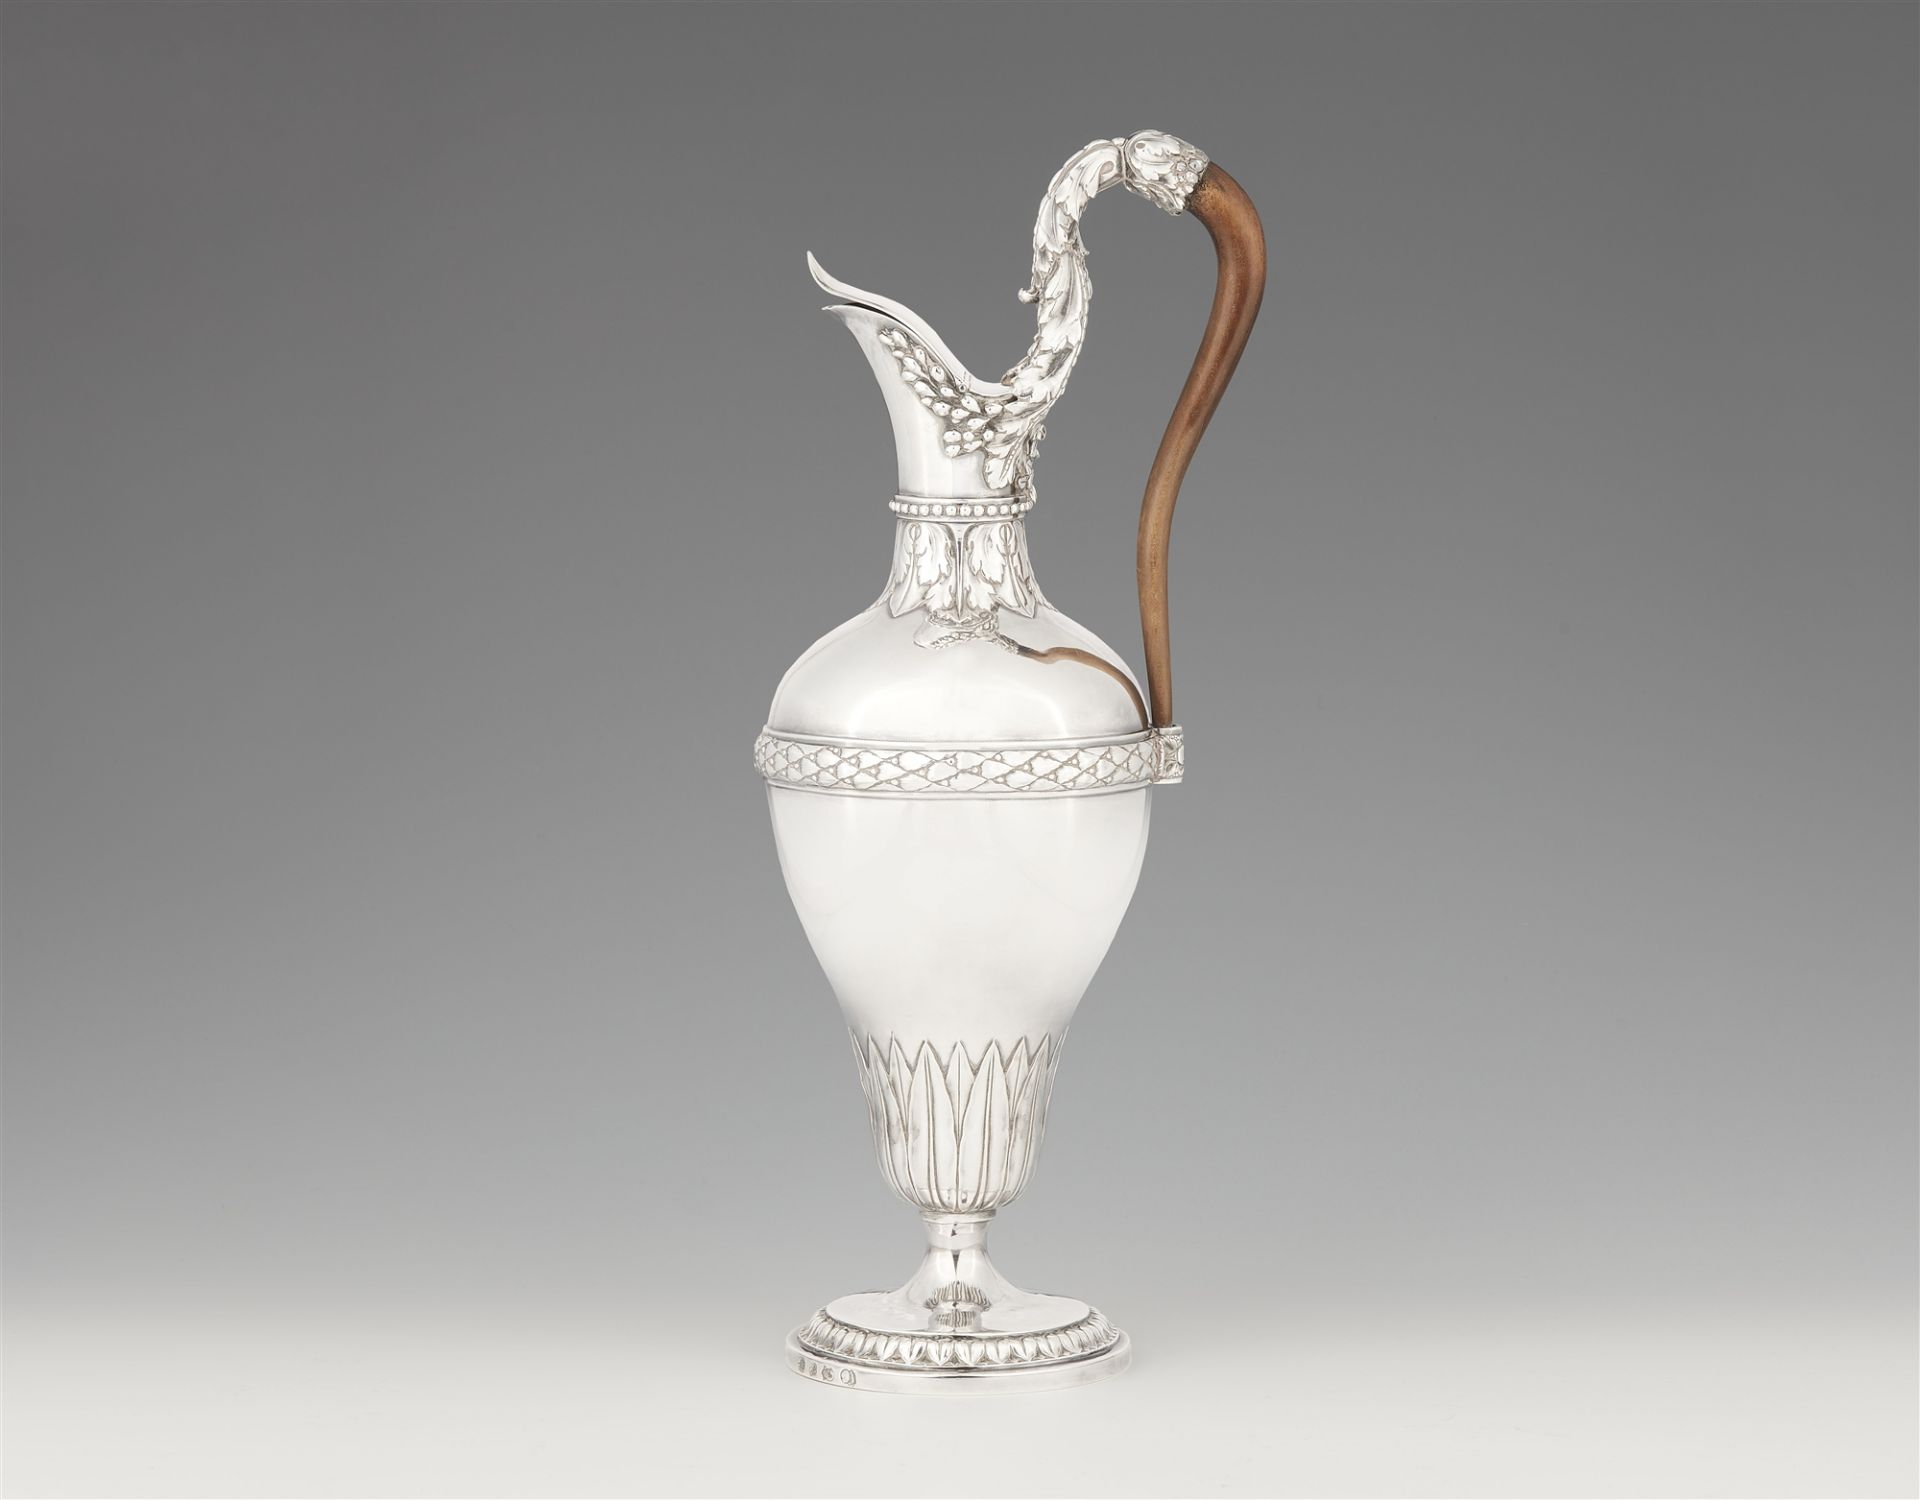 A Ghent silver pitcher